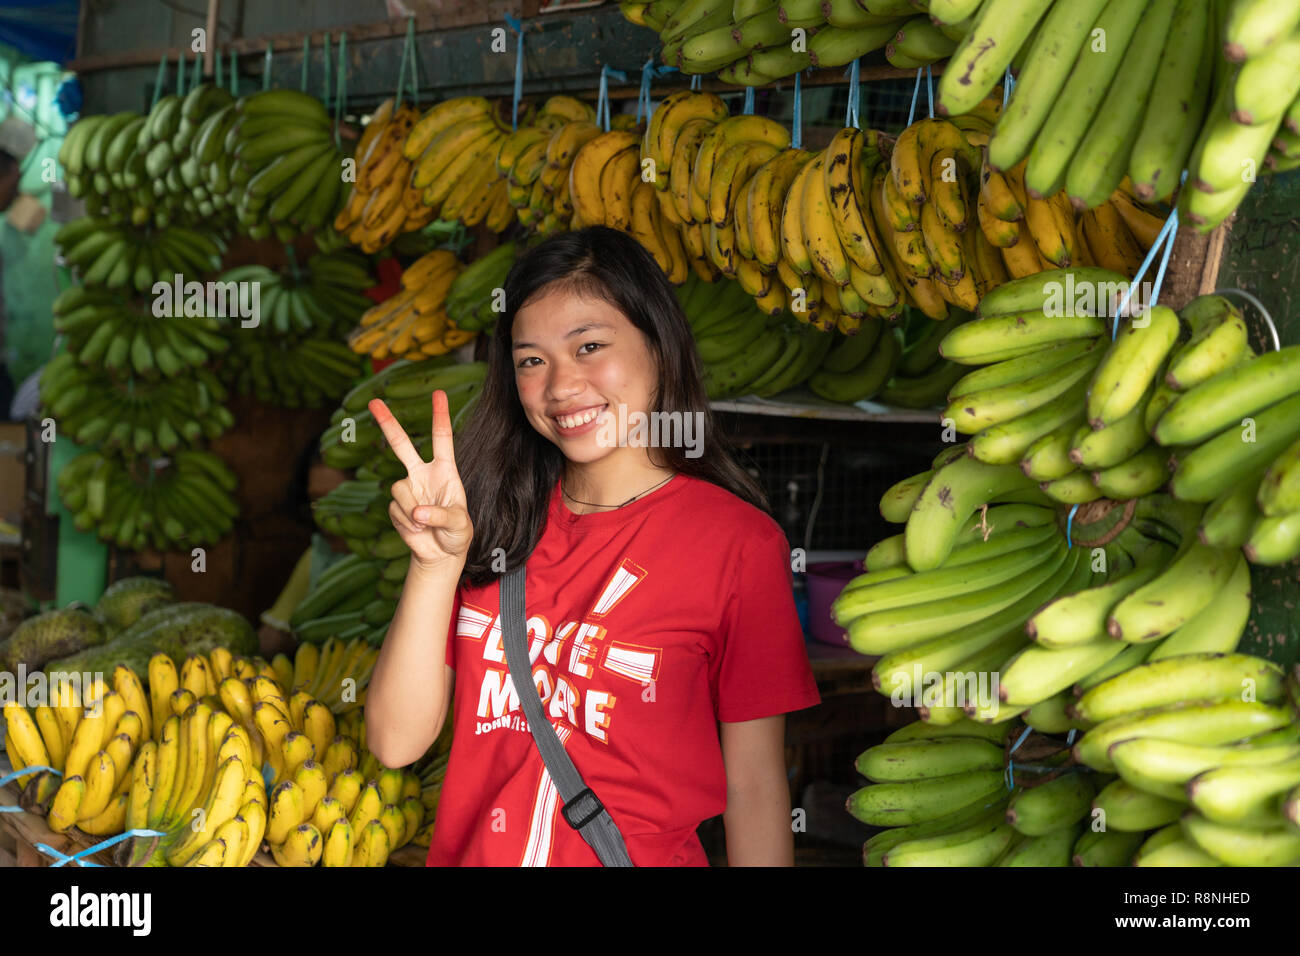 A young Filipina girl selling bananas smiles for the camera. Stock Photo